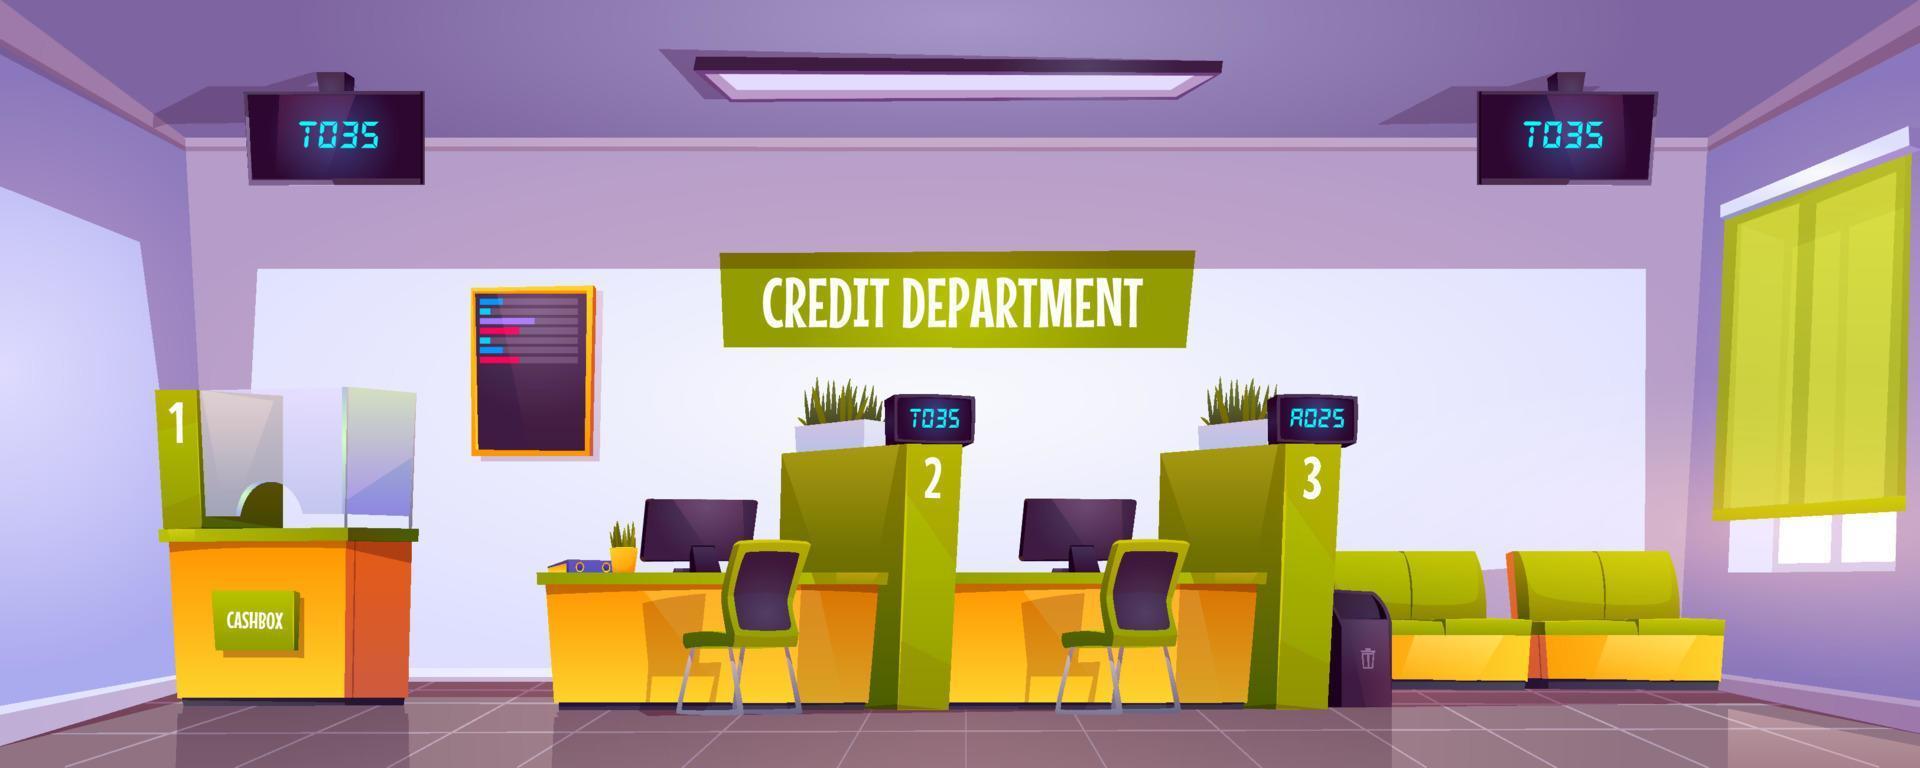 credit afdeling interieur in bank kantoor vector